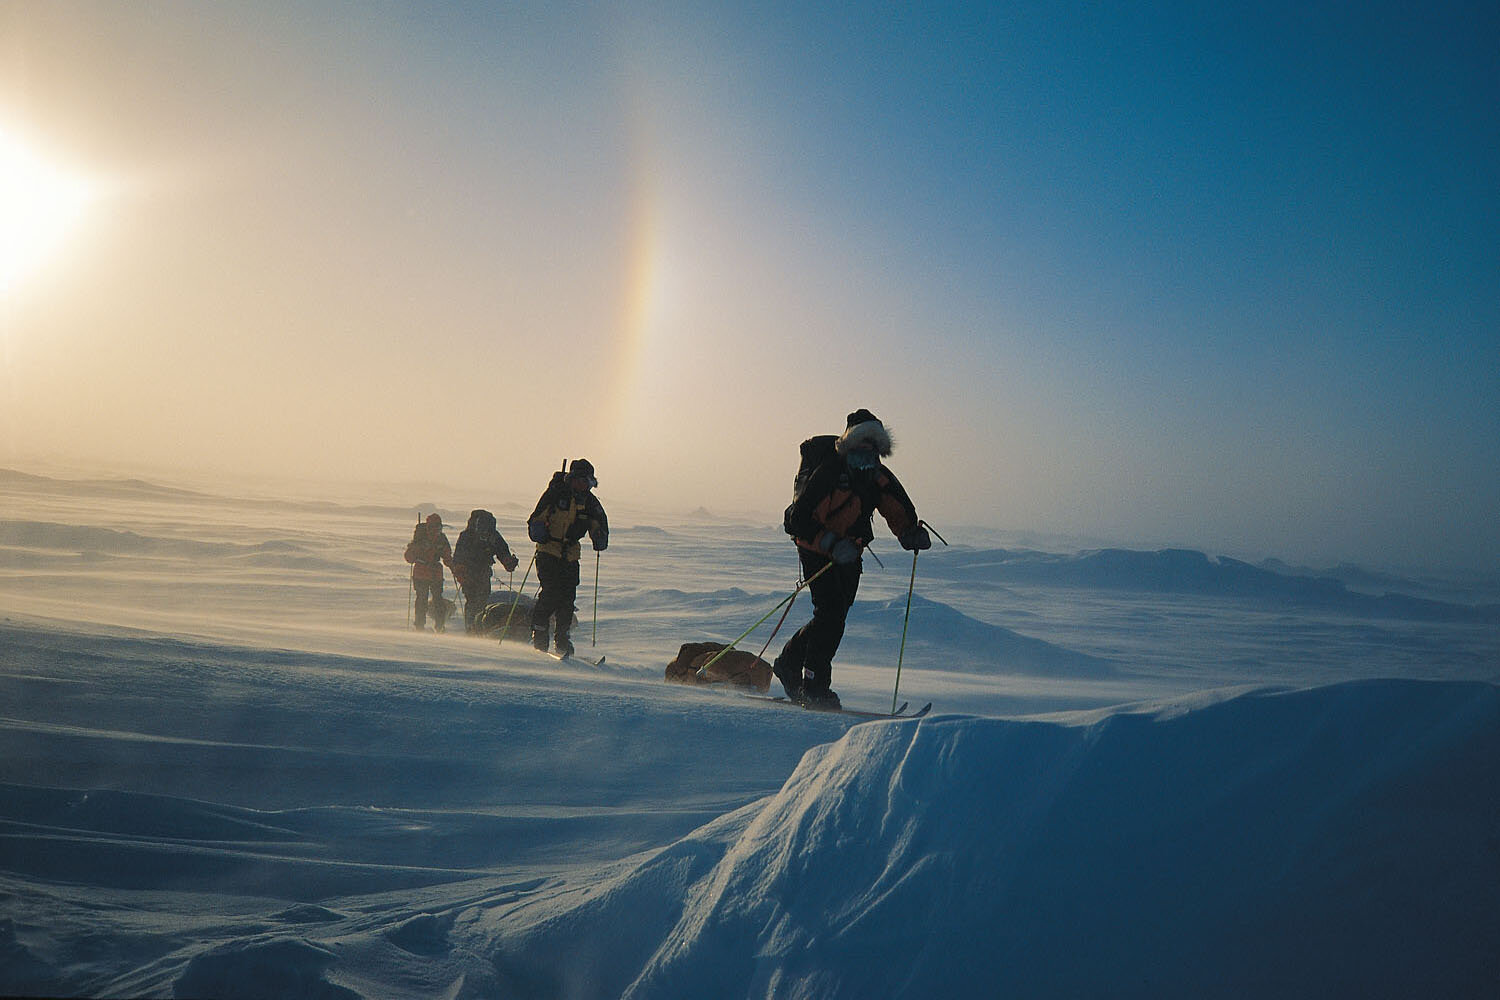 North Pole Express-Ousland Explorers-Lars Ebbesen.jpg